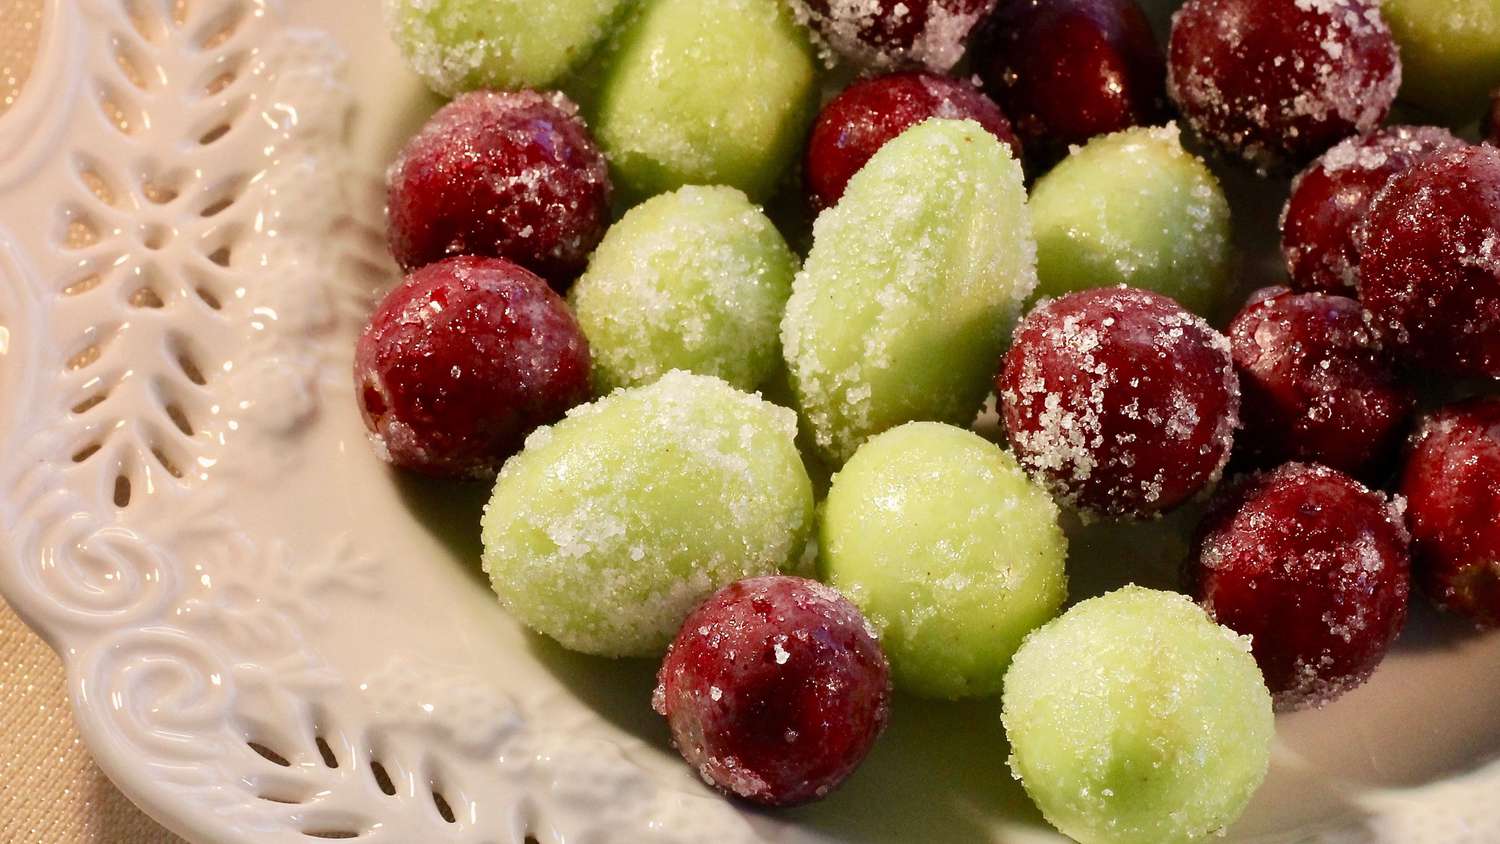 "Спа" Ctacular Frozen Grapes